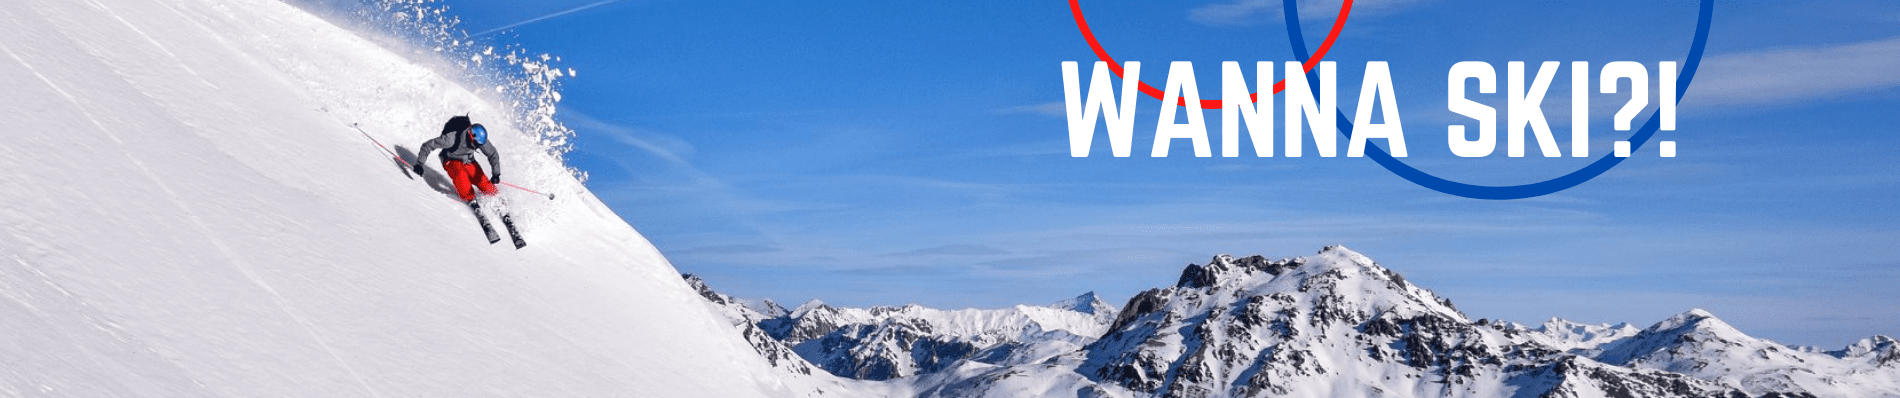 SKI FRANKRIJK franse alpen wintersport vakantie